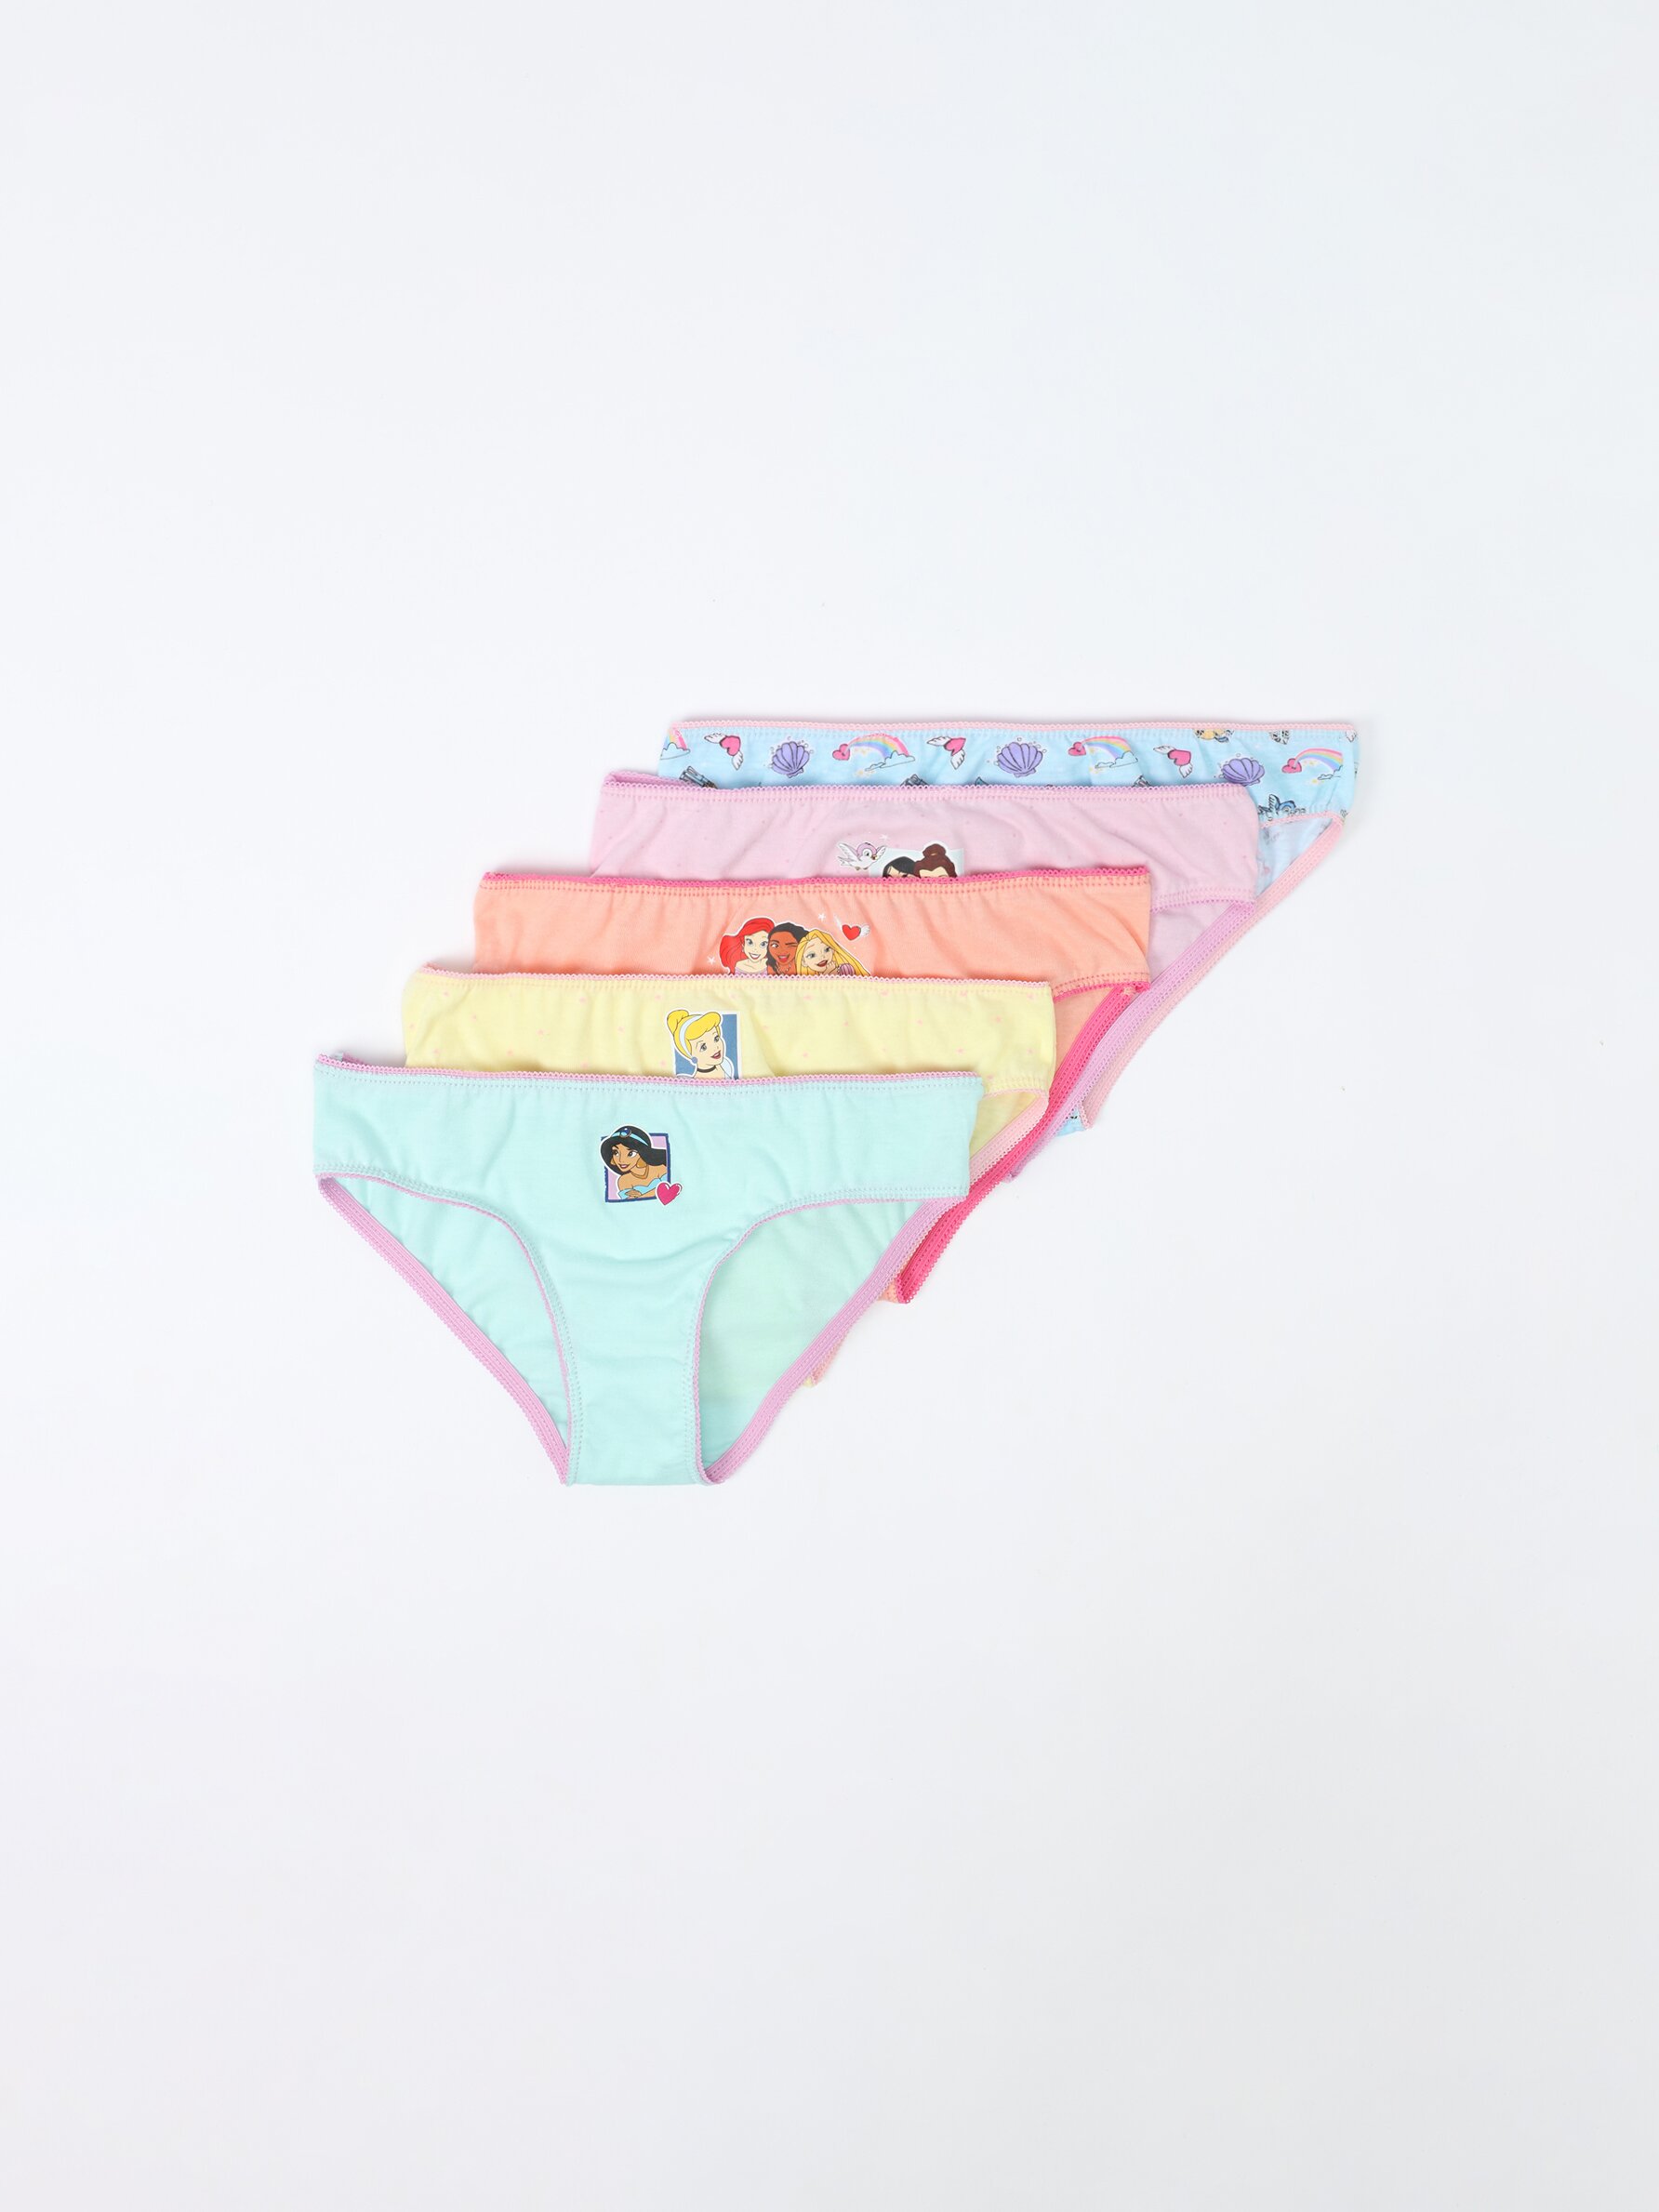 5-pack of ©Disney Princesses briefs - Briefs - Underwear - CLOTHING - Girl  - Kids 